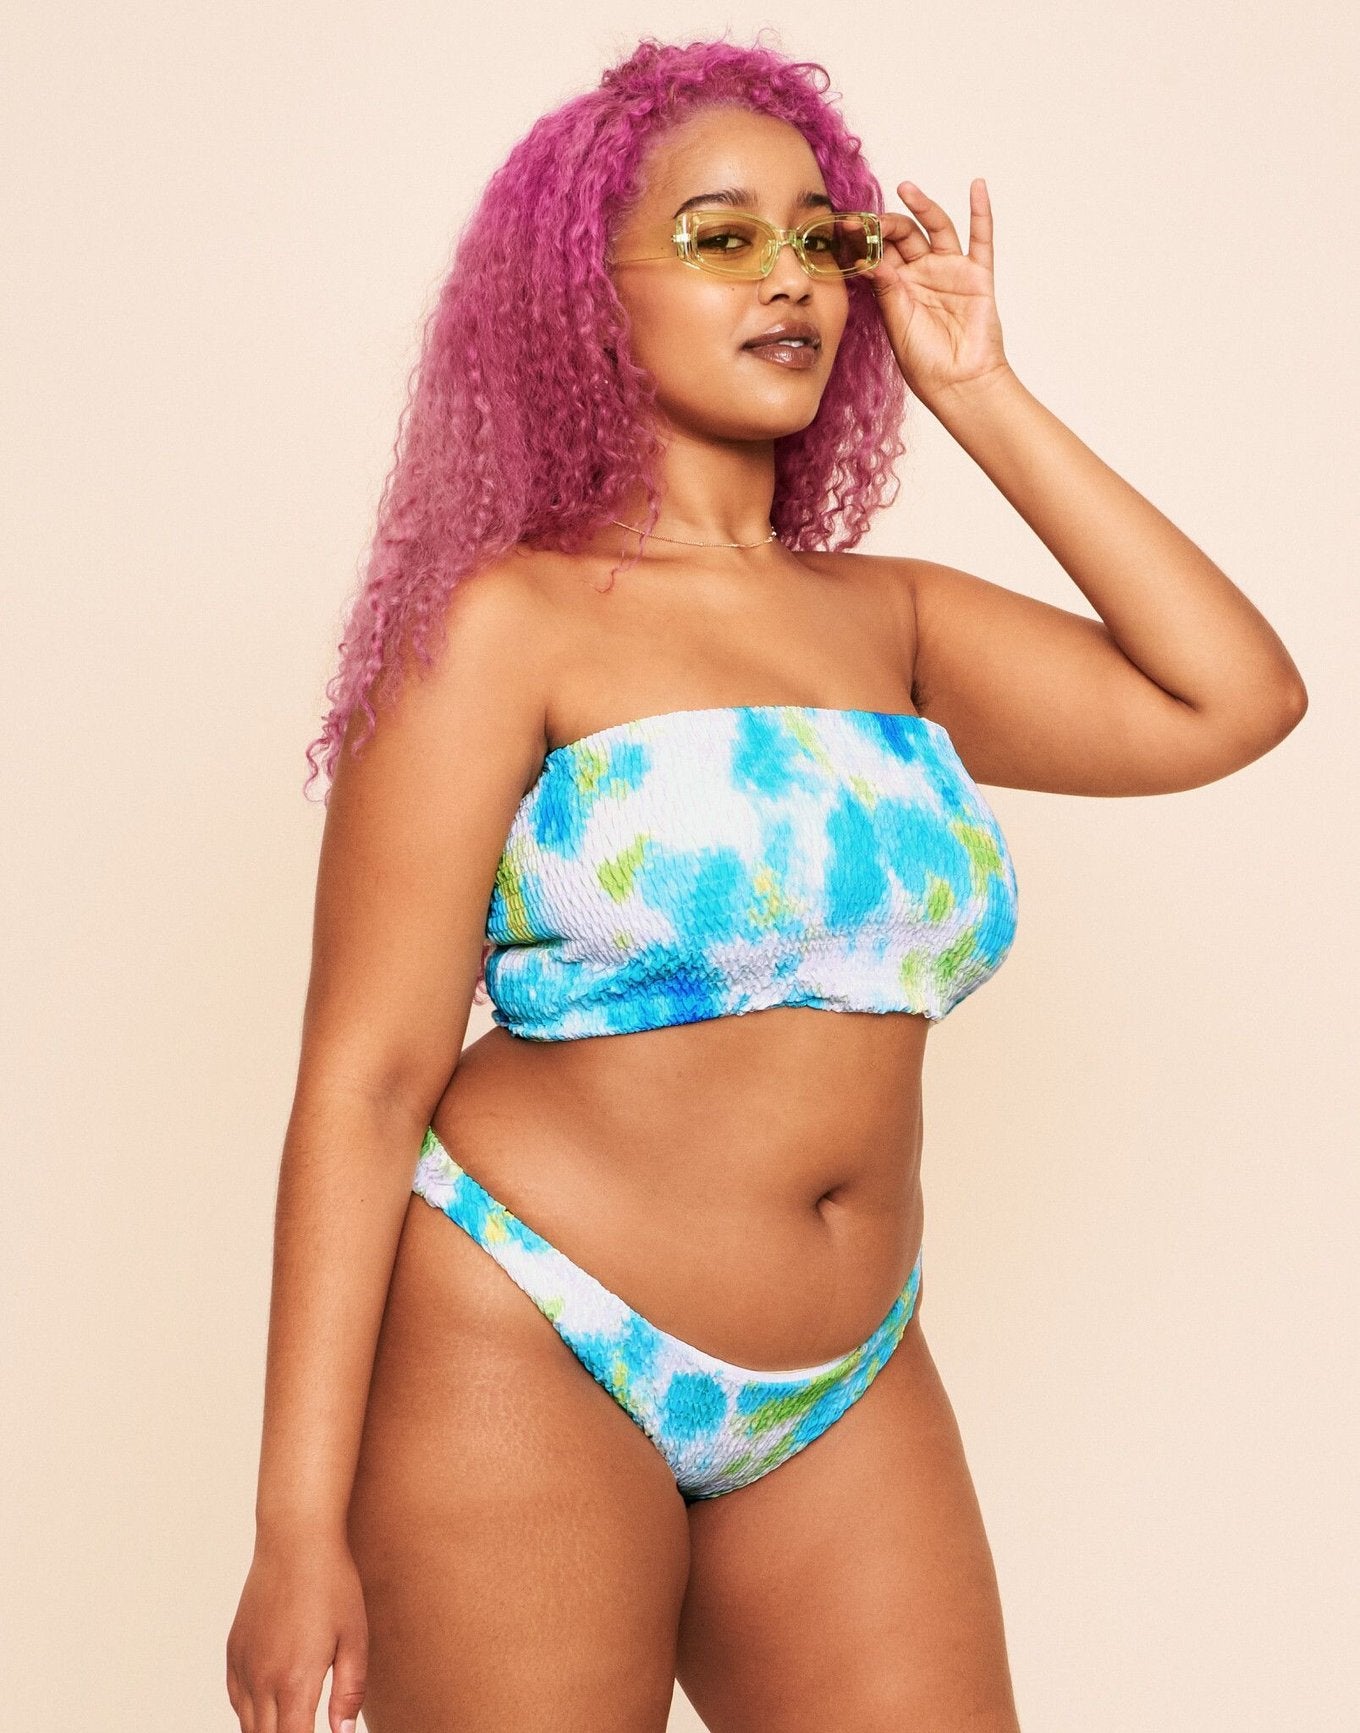 Earth Republic Arlette Smocking Bandeau Top Swim Top in color PR171261 - Opt01 and shape bikini